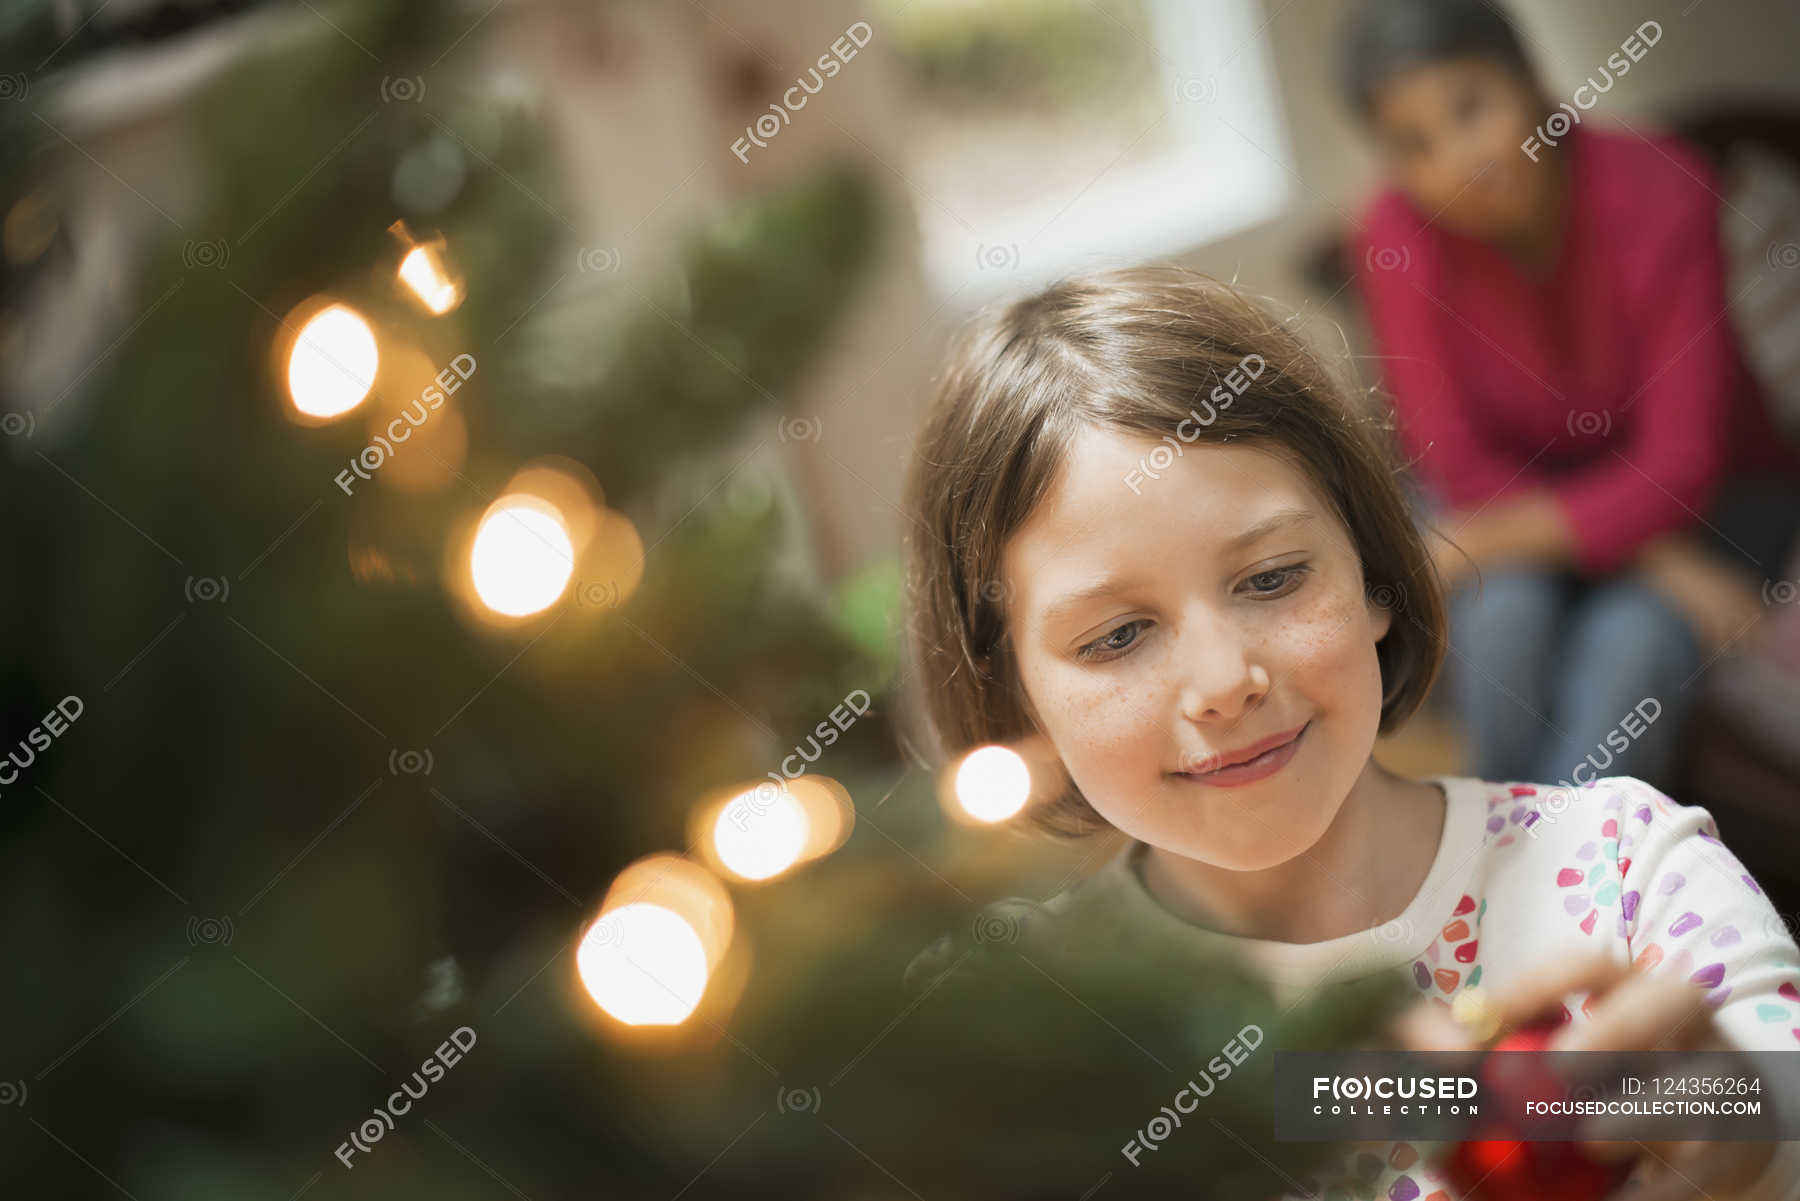 Girl placing bauble on Christmas tree — Stock Photo | #124356264